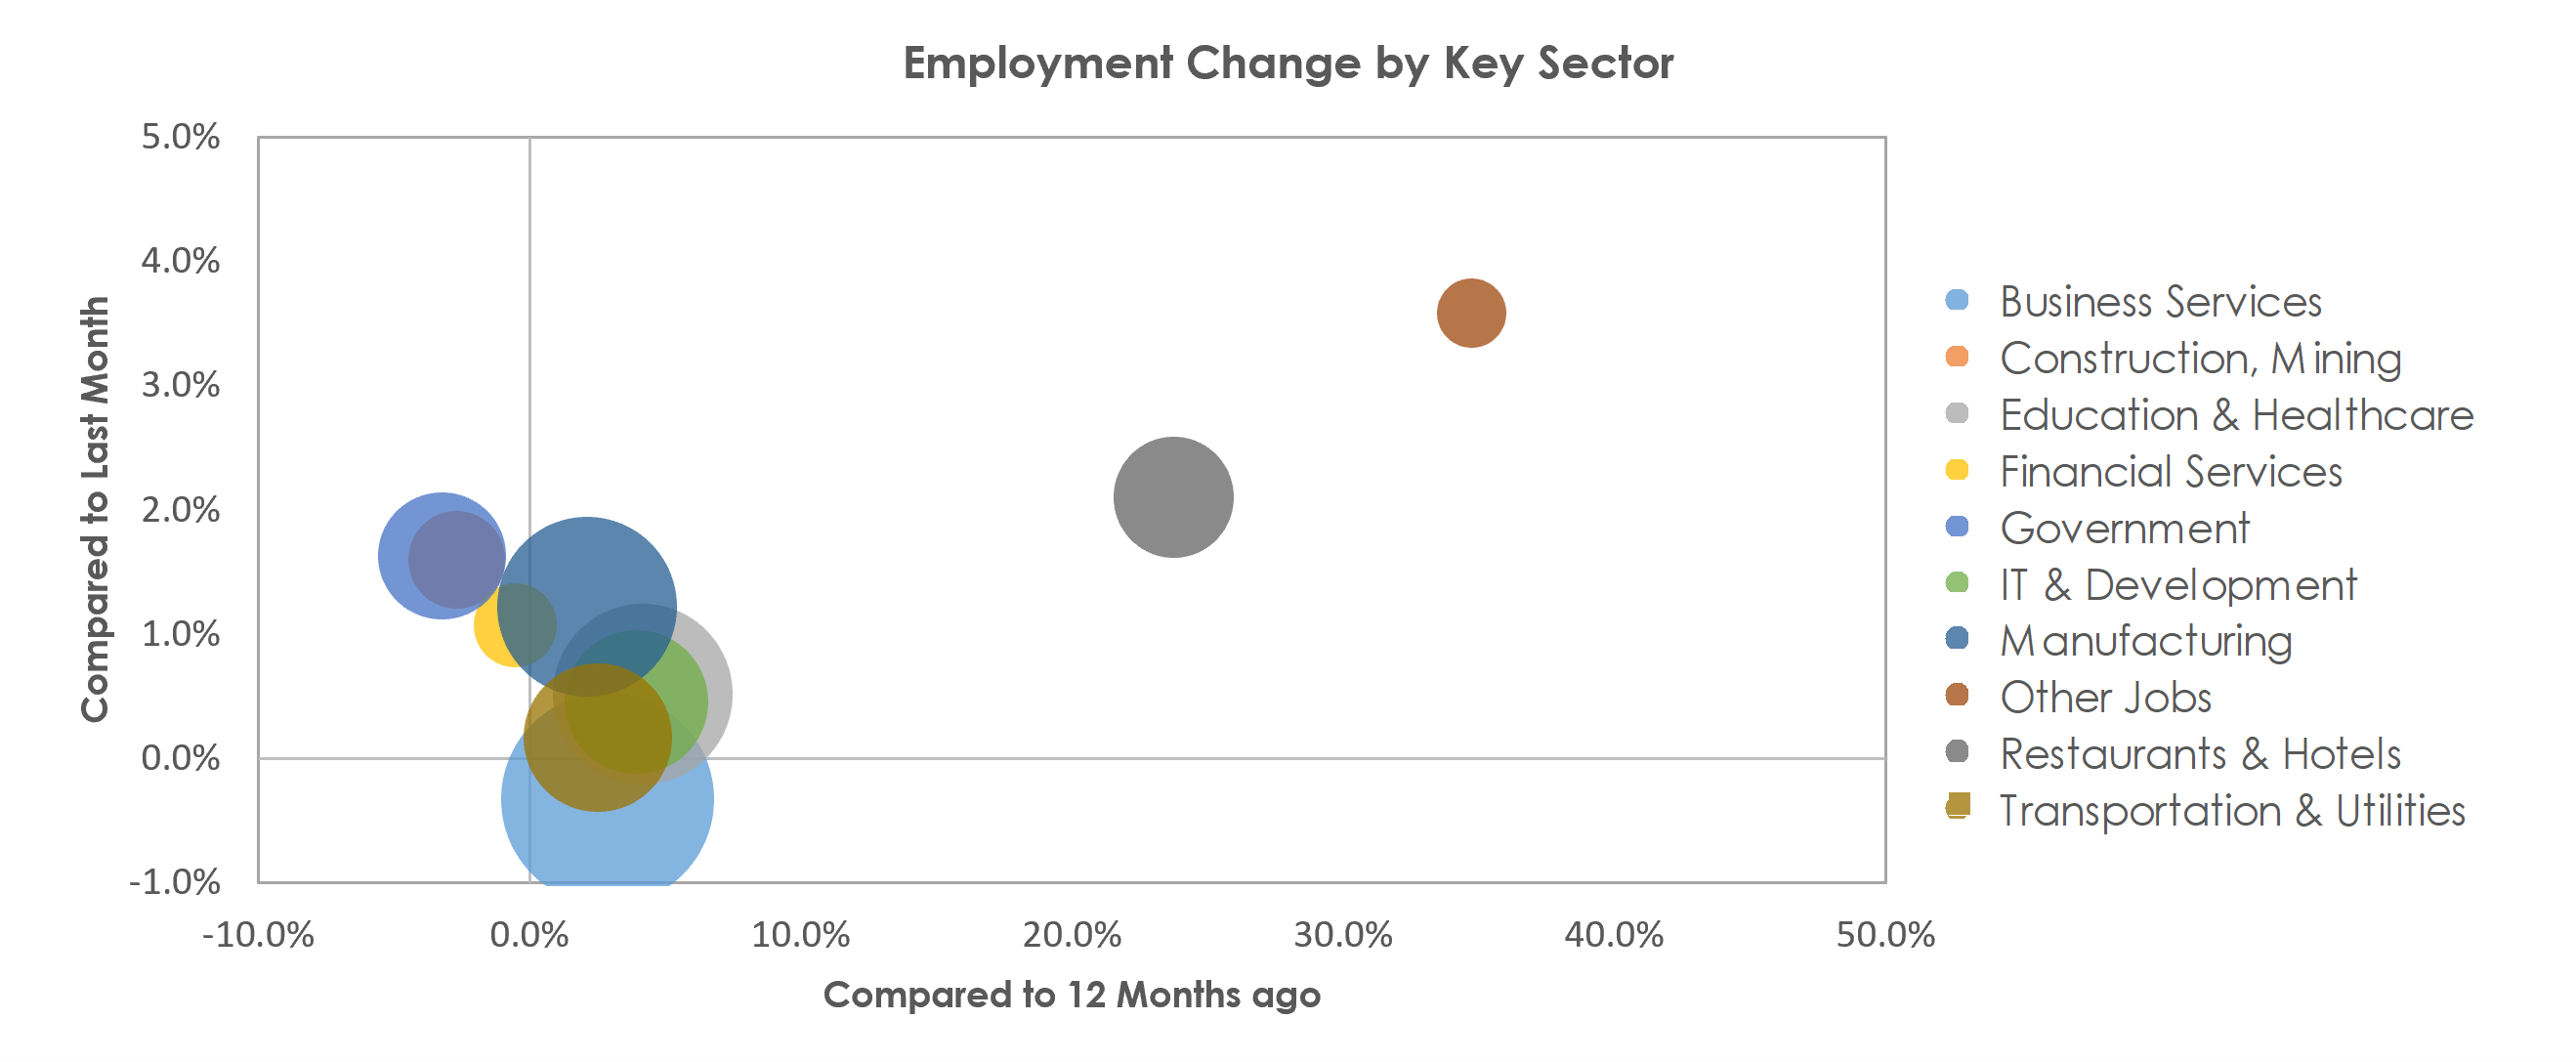 San Jose-Sunnyvale-Santa Clara, CA Unemployment by Industry August 2021